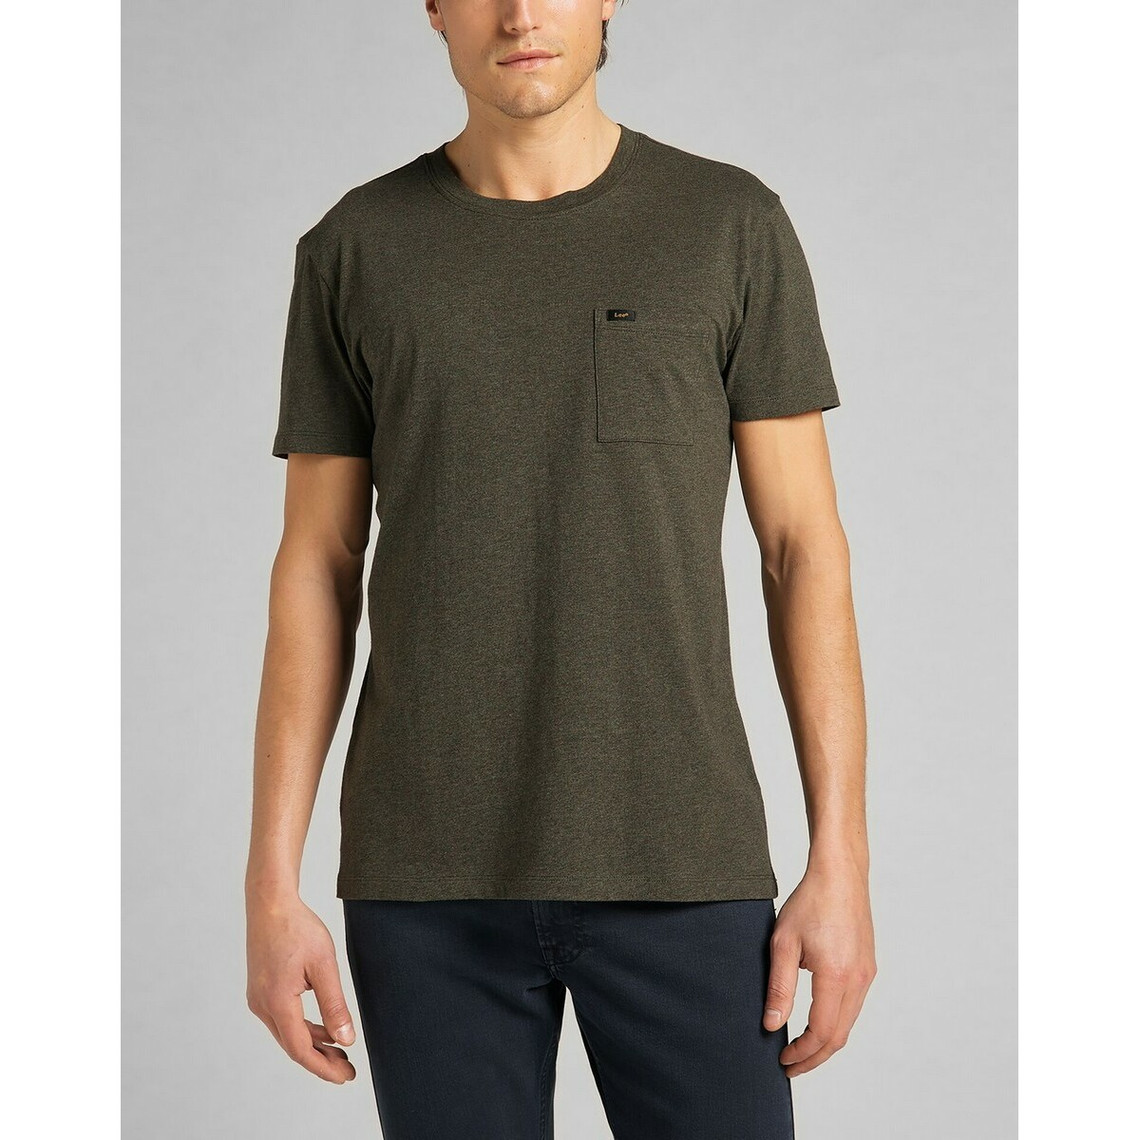 T-Shirt MC Homme Ultimate Pocket Tee vert olive en coton